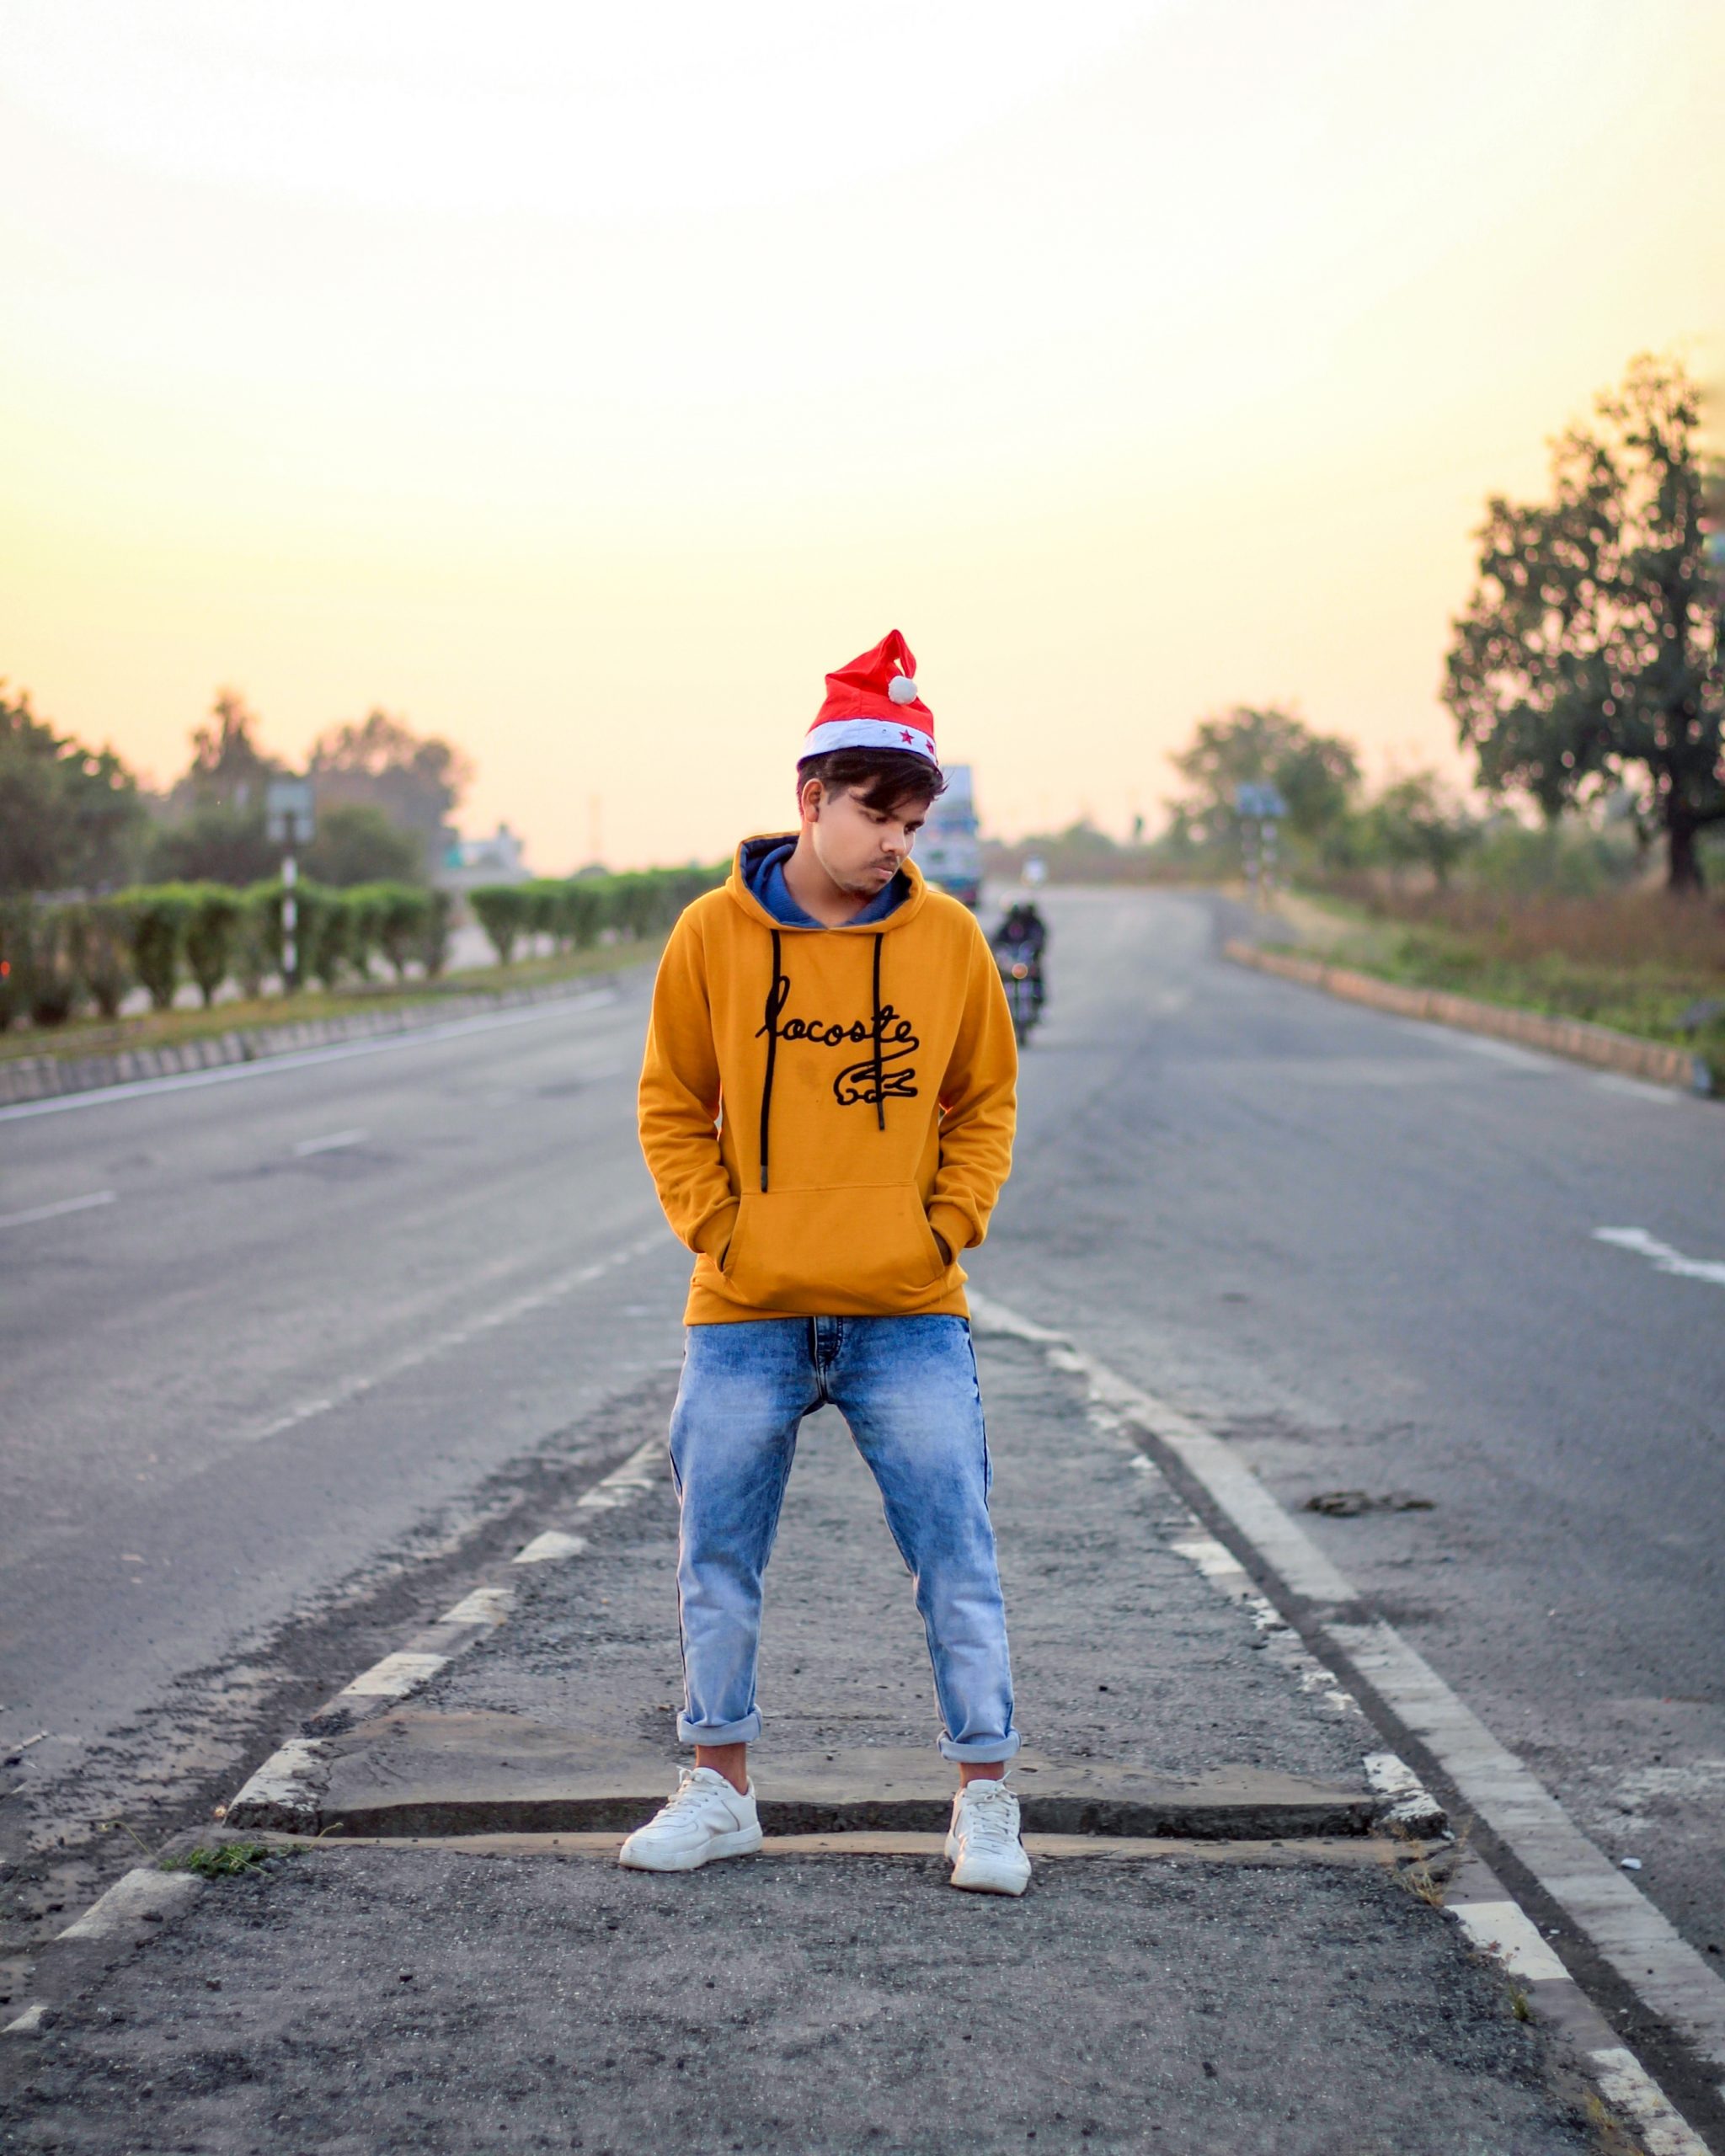 A boy on a road